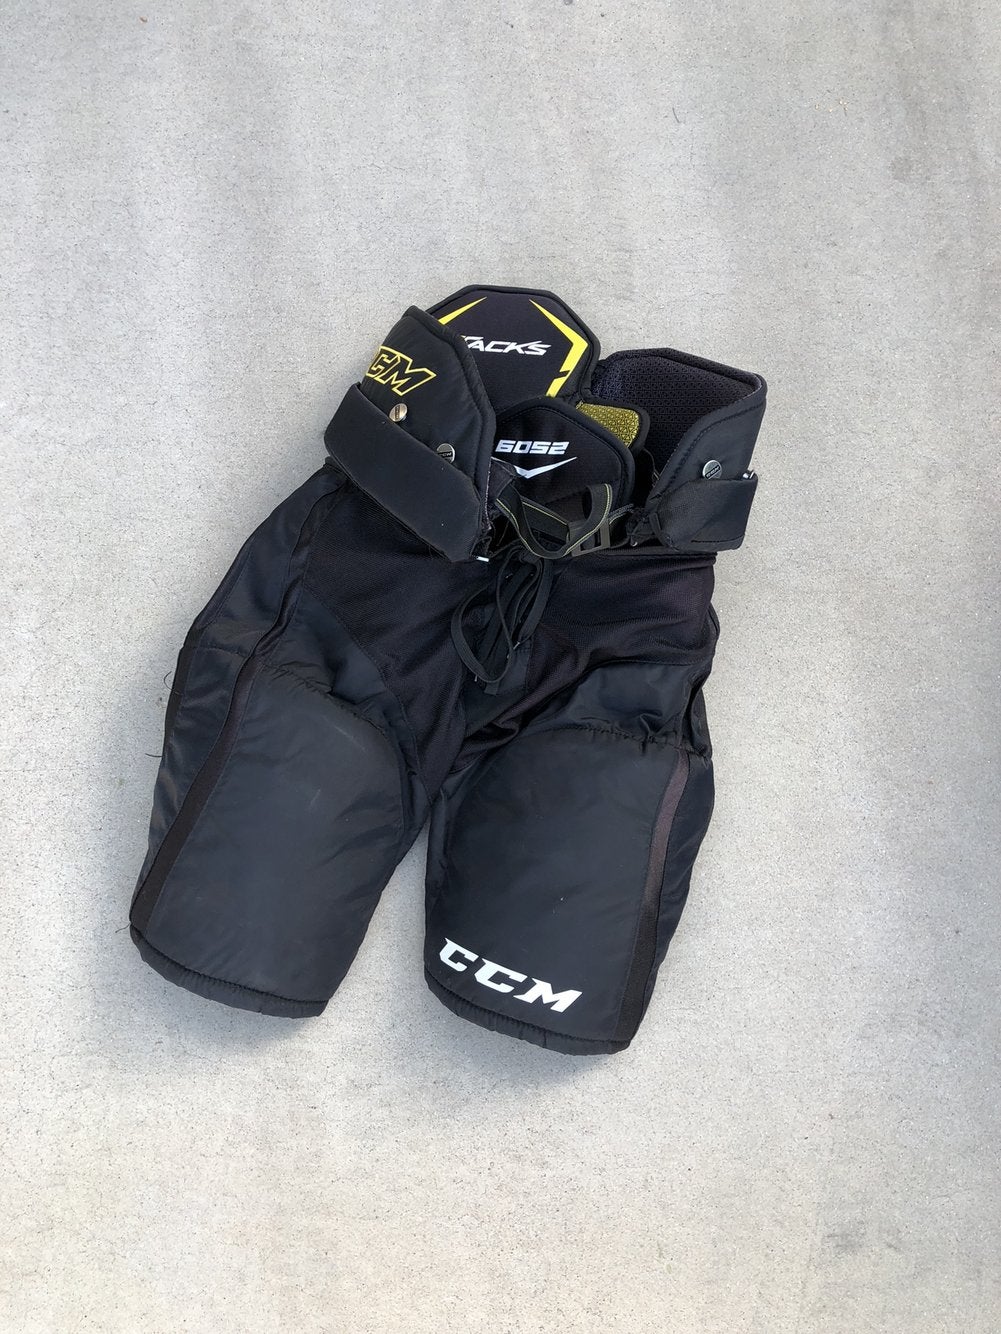 CCM Hockey Tacks 692 NHL Junior Large Pants Excellent++++ Lightly Used Shape